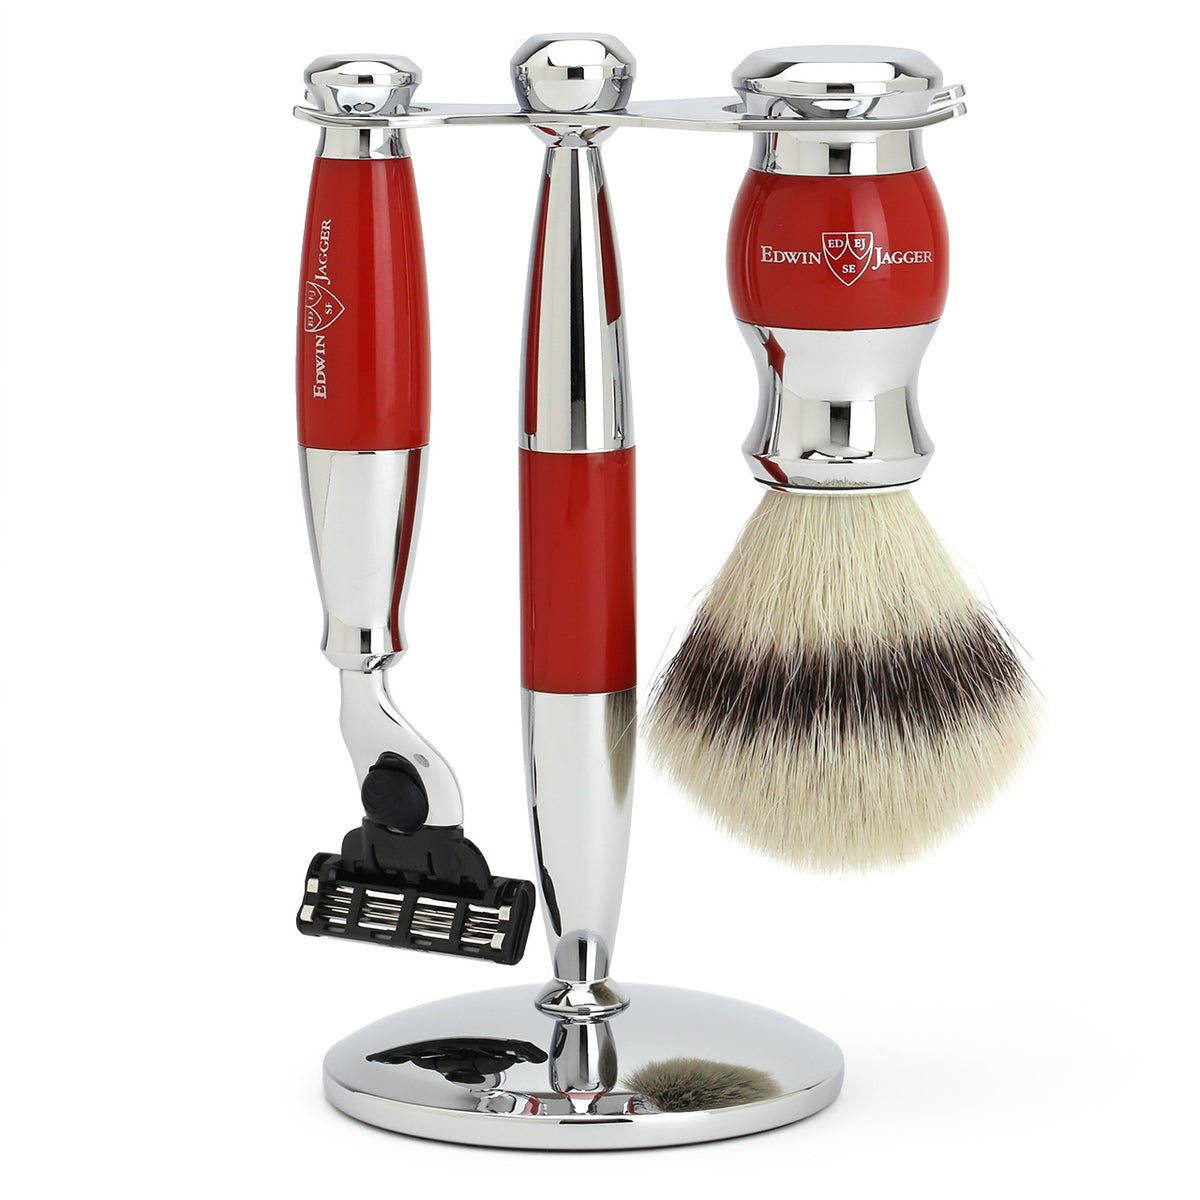 Edwin Jagger Shaving Set with Mach3 Razor, Shaving Brush &amp; Stand - Red